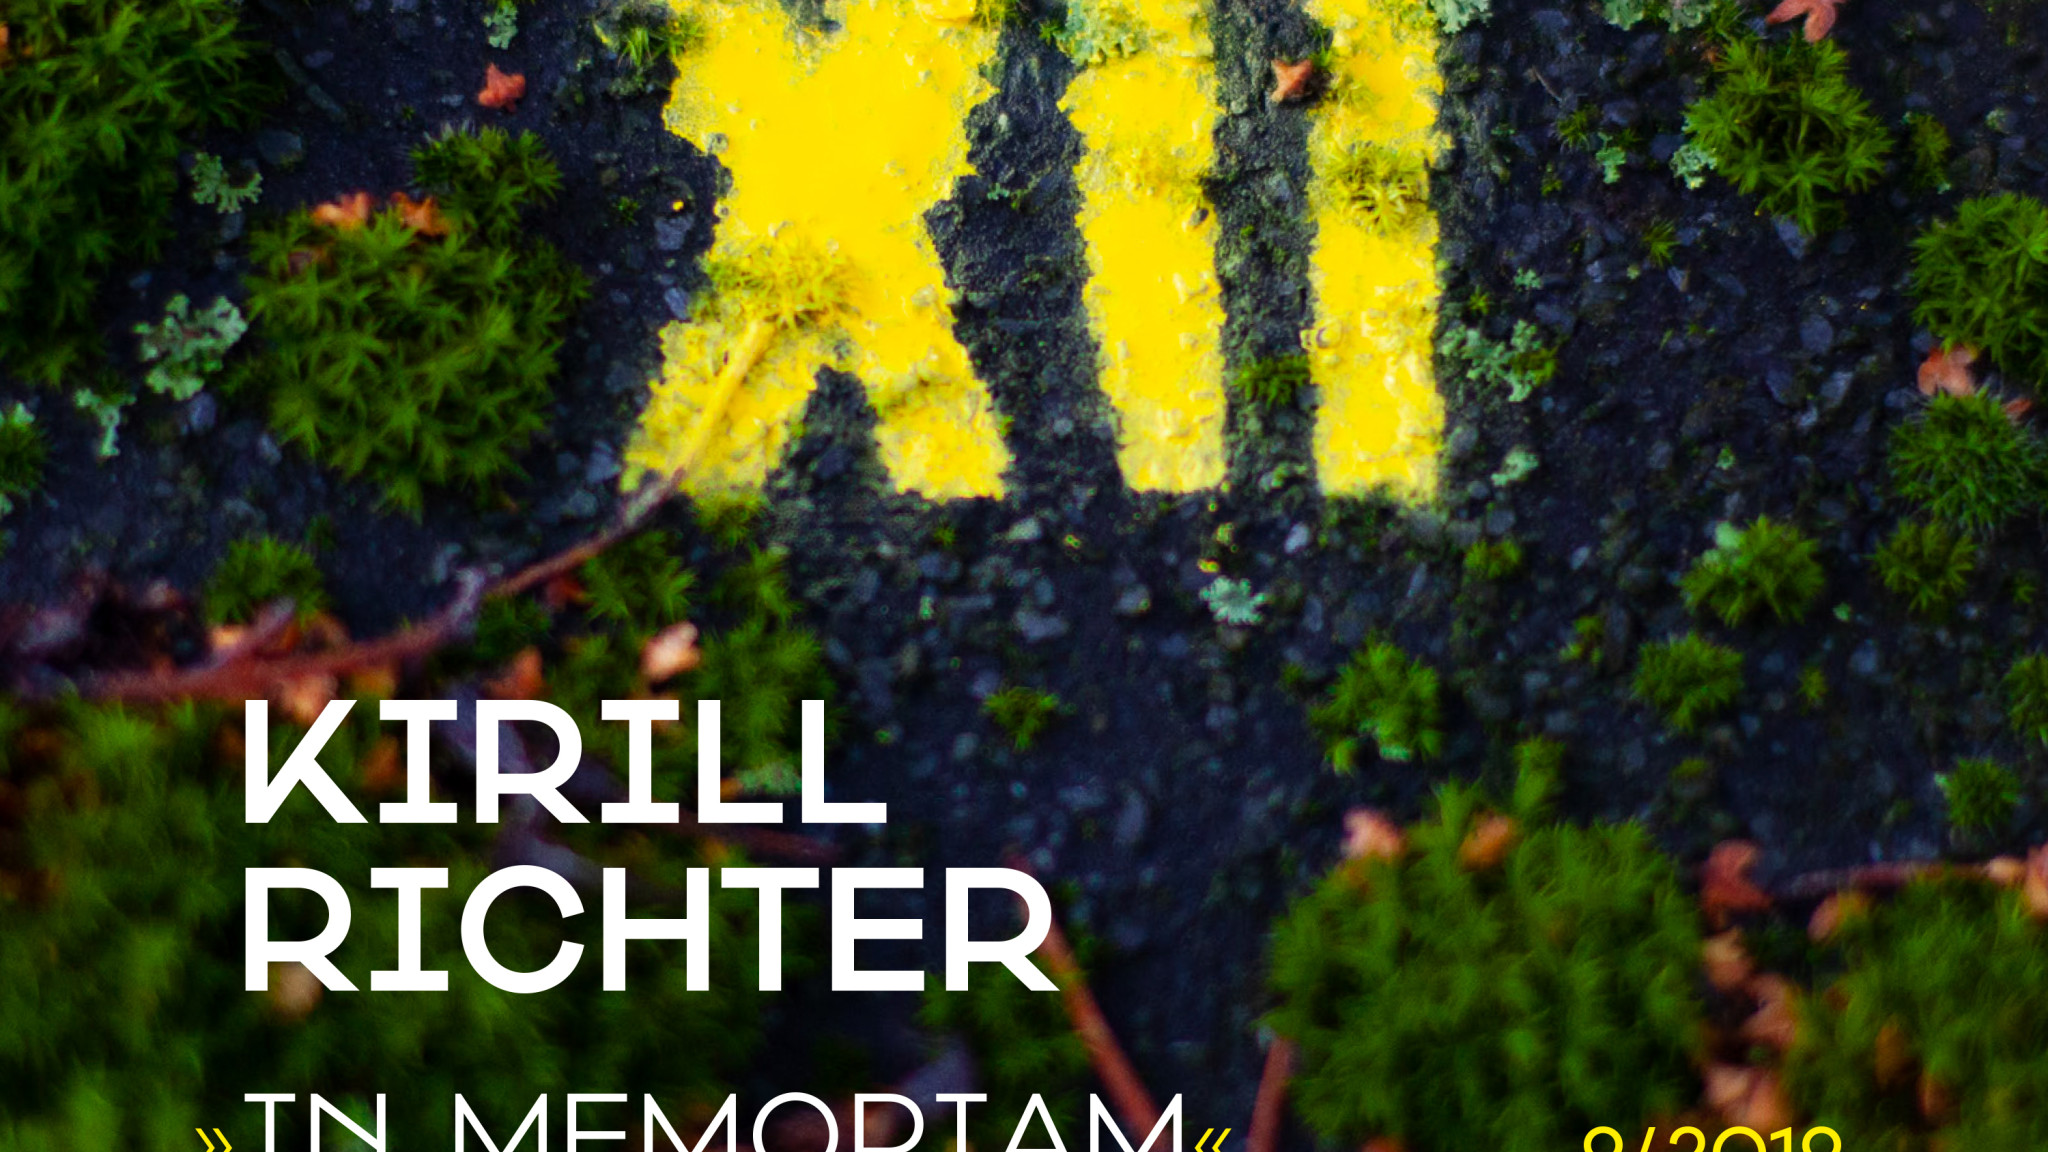 Kirill Richter - "In Memoriam"